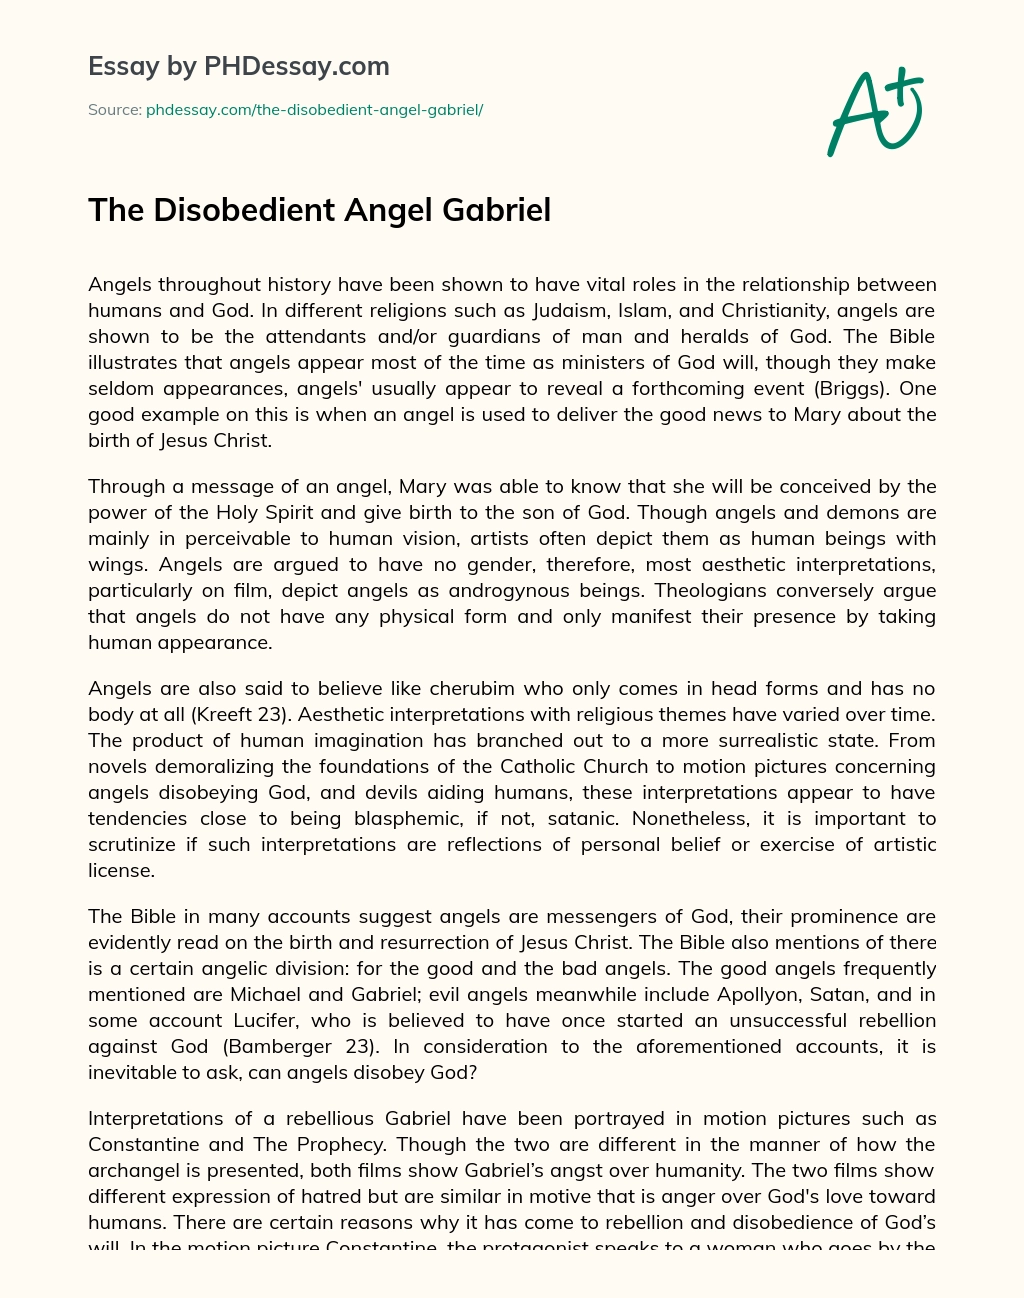 The Disobedient Angel Gabriel essay